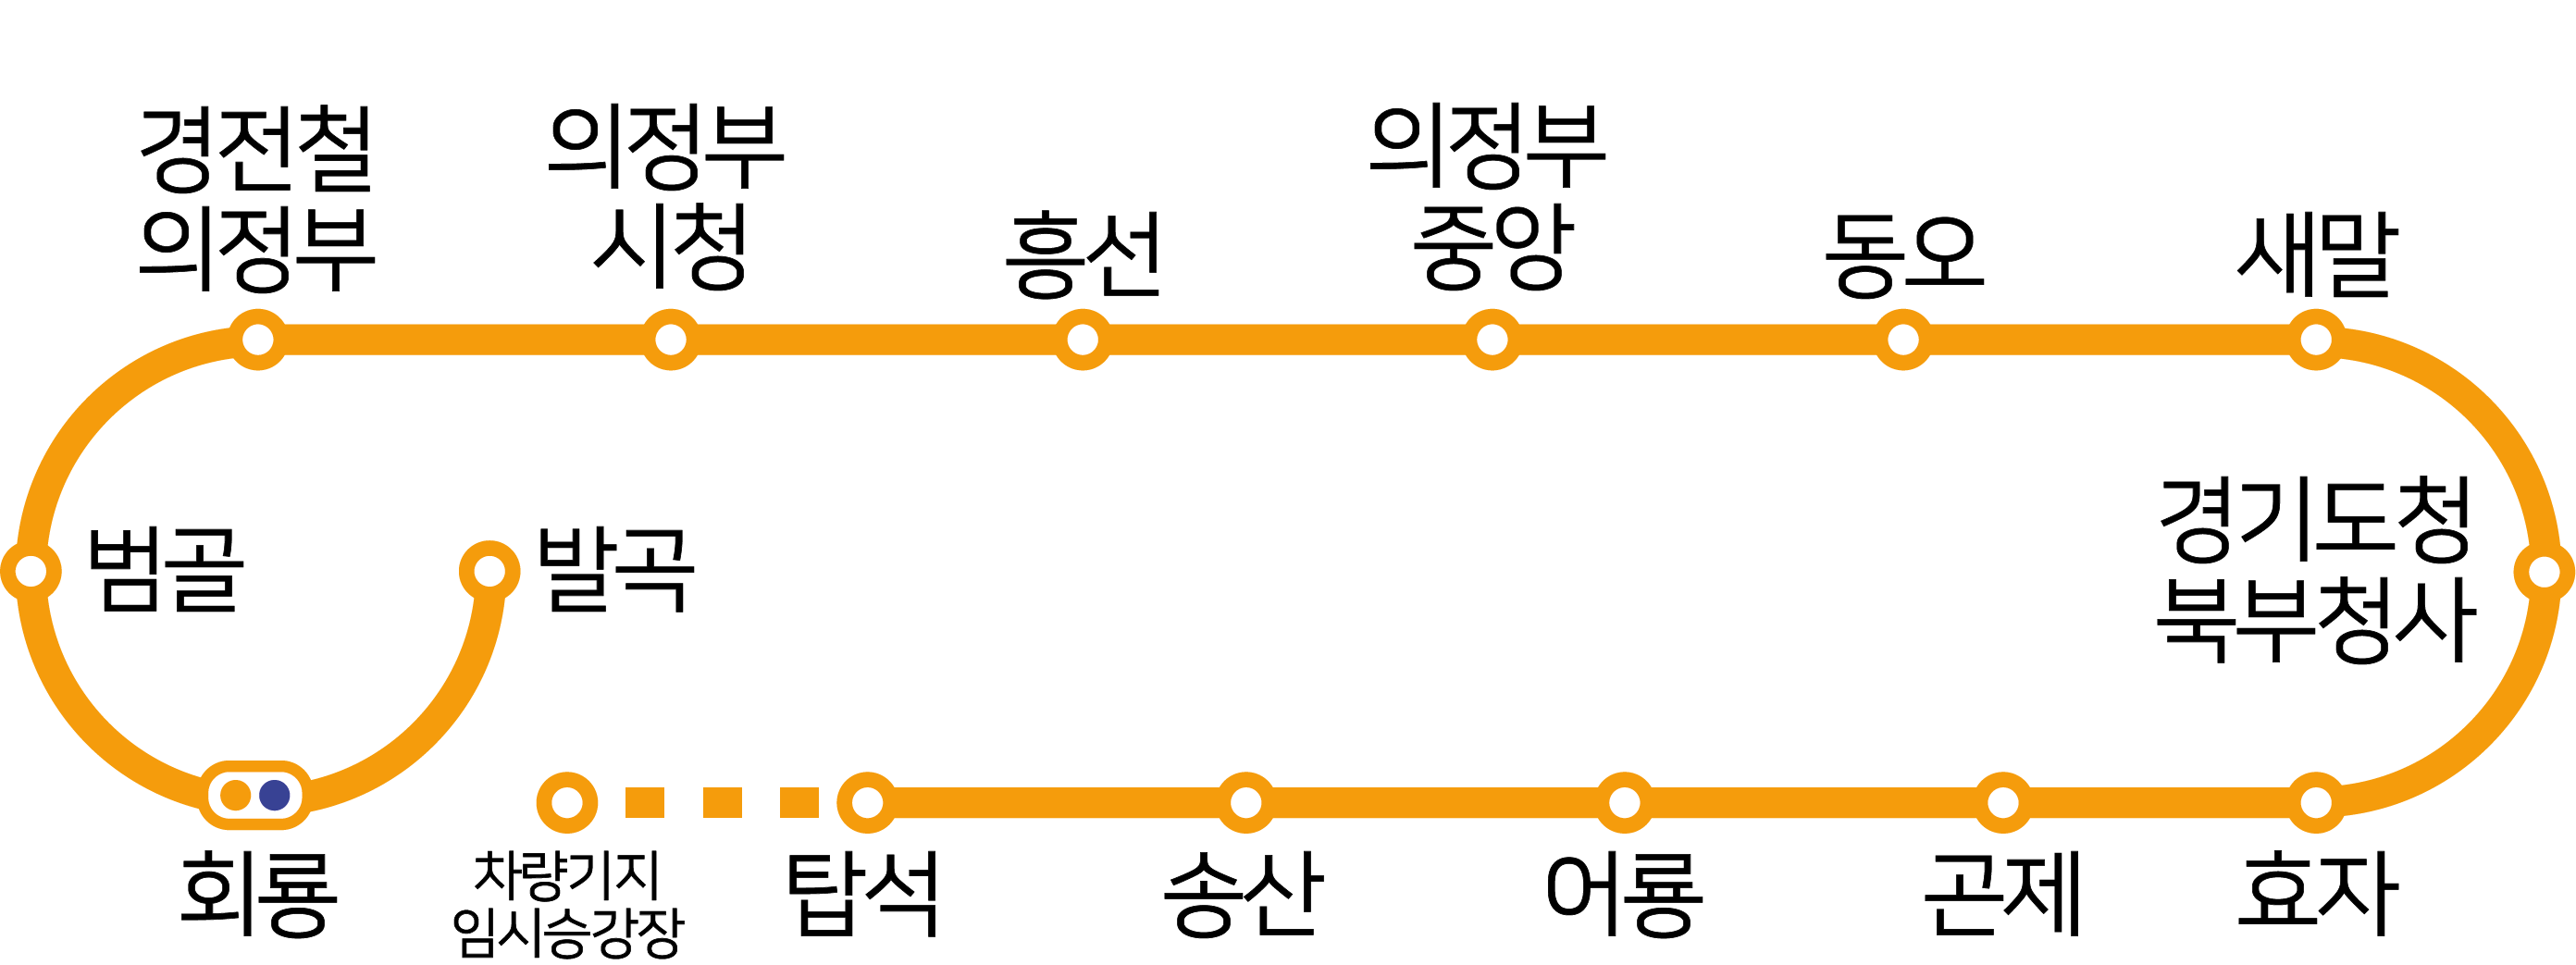 Uijeongbu LRT line map, Balgok, Hoeryong(transfer to Subway 1), Beomgol, LRT Uijeongbu, Uijeonbu City Hall, Heungseon, Central Uijeongbu, Dongo, Saemal, Gyeonggi Provincial Government North Office, Hyoja, Gonje, Ueoryong, Songsan, Tapseok